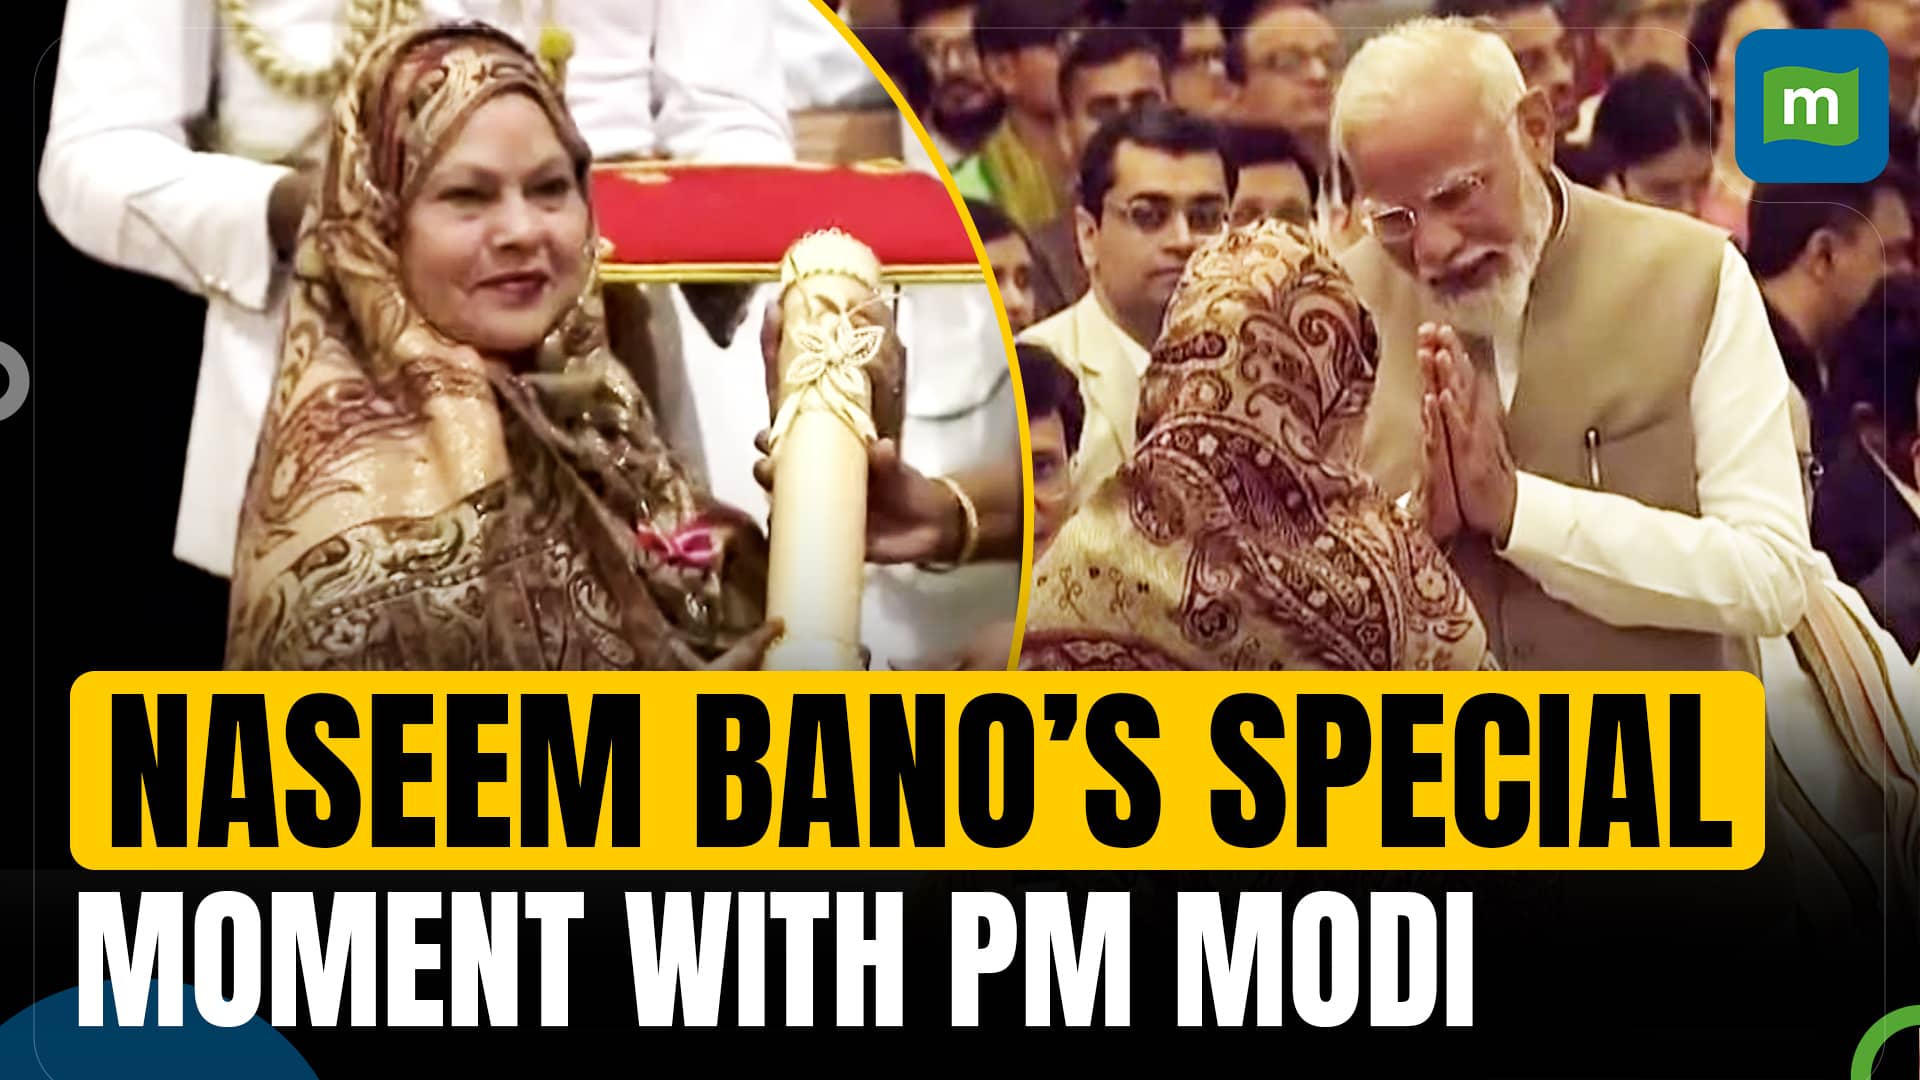 Naseem Bano, Chikankari Practitioner & Padma Shri Awardee, Shared A Special Moment With PM Modi